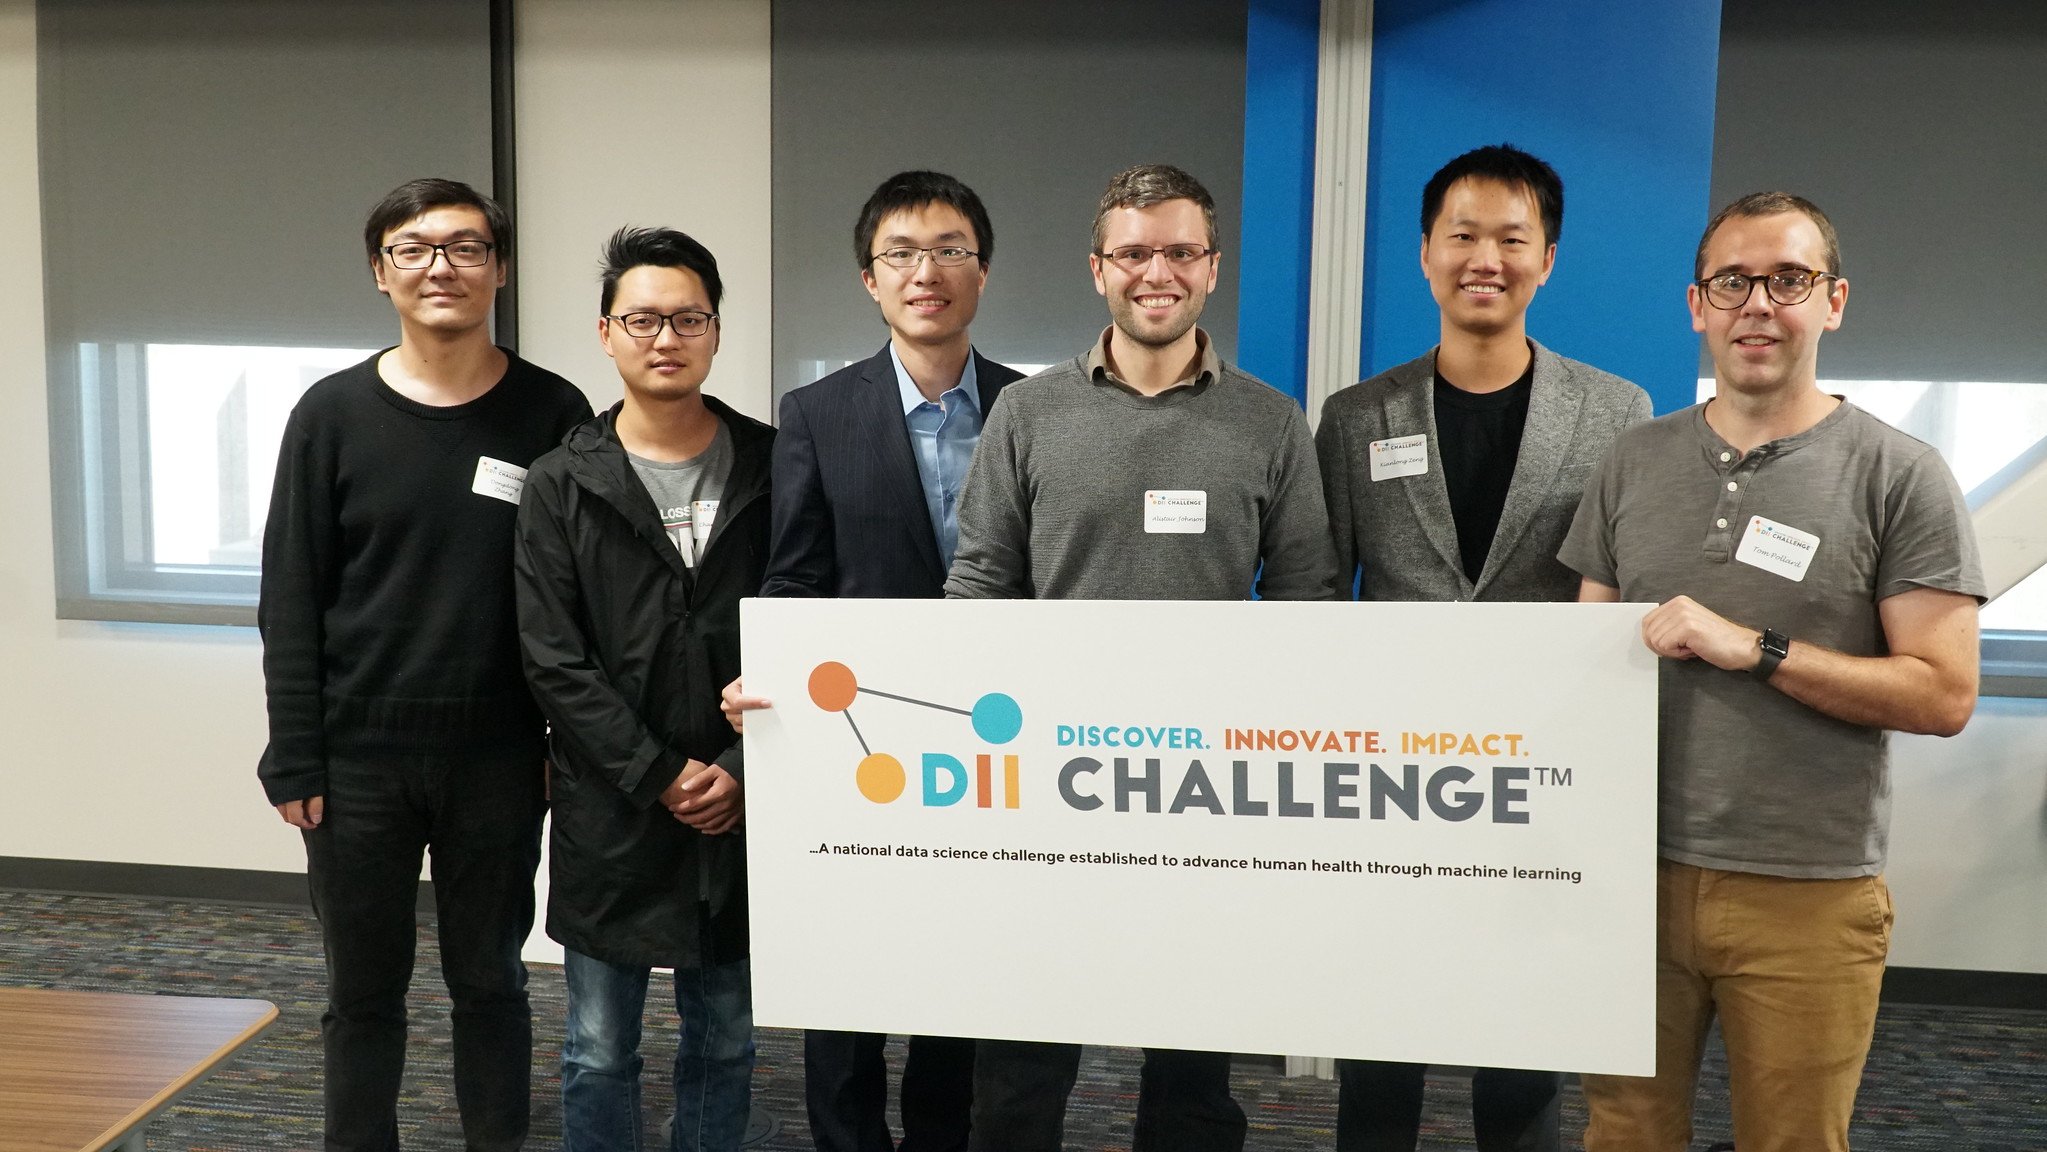 2019 DII Challenge Workshop Presenters: Dongdong Zhang and Changchang Yin, Buckeye AI Team; Xianghao Chen, GuanLab Team; Alistair Johnson, LCP Team; Xianlong Zeng, NCH Team; and Tom Pollard, LCP Team.